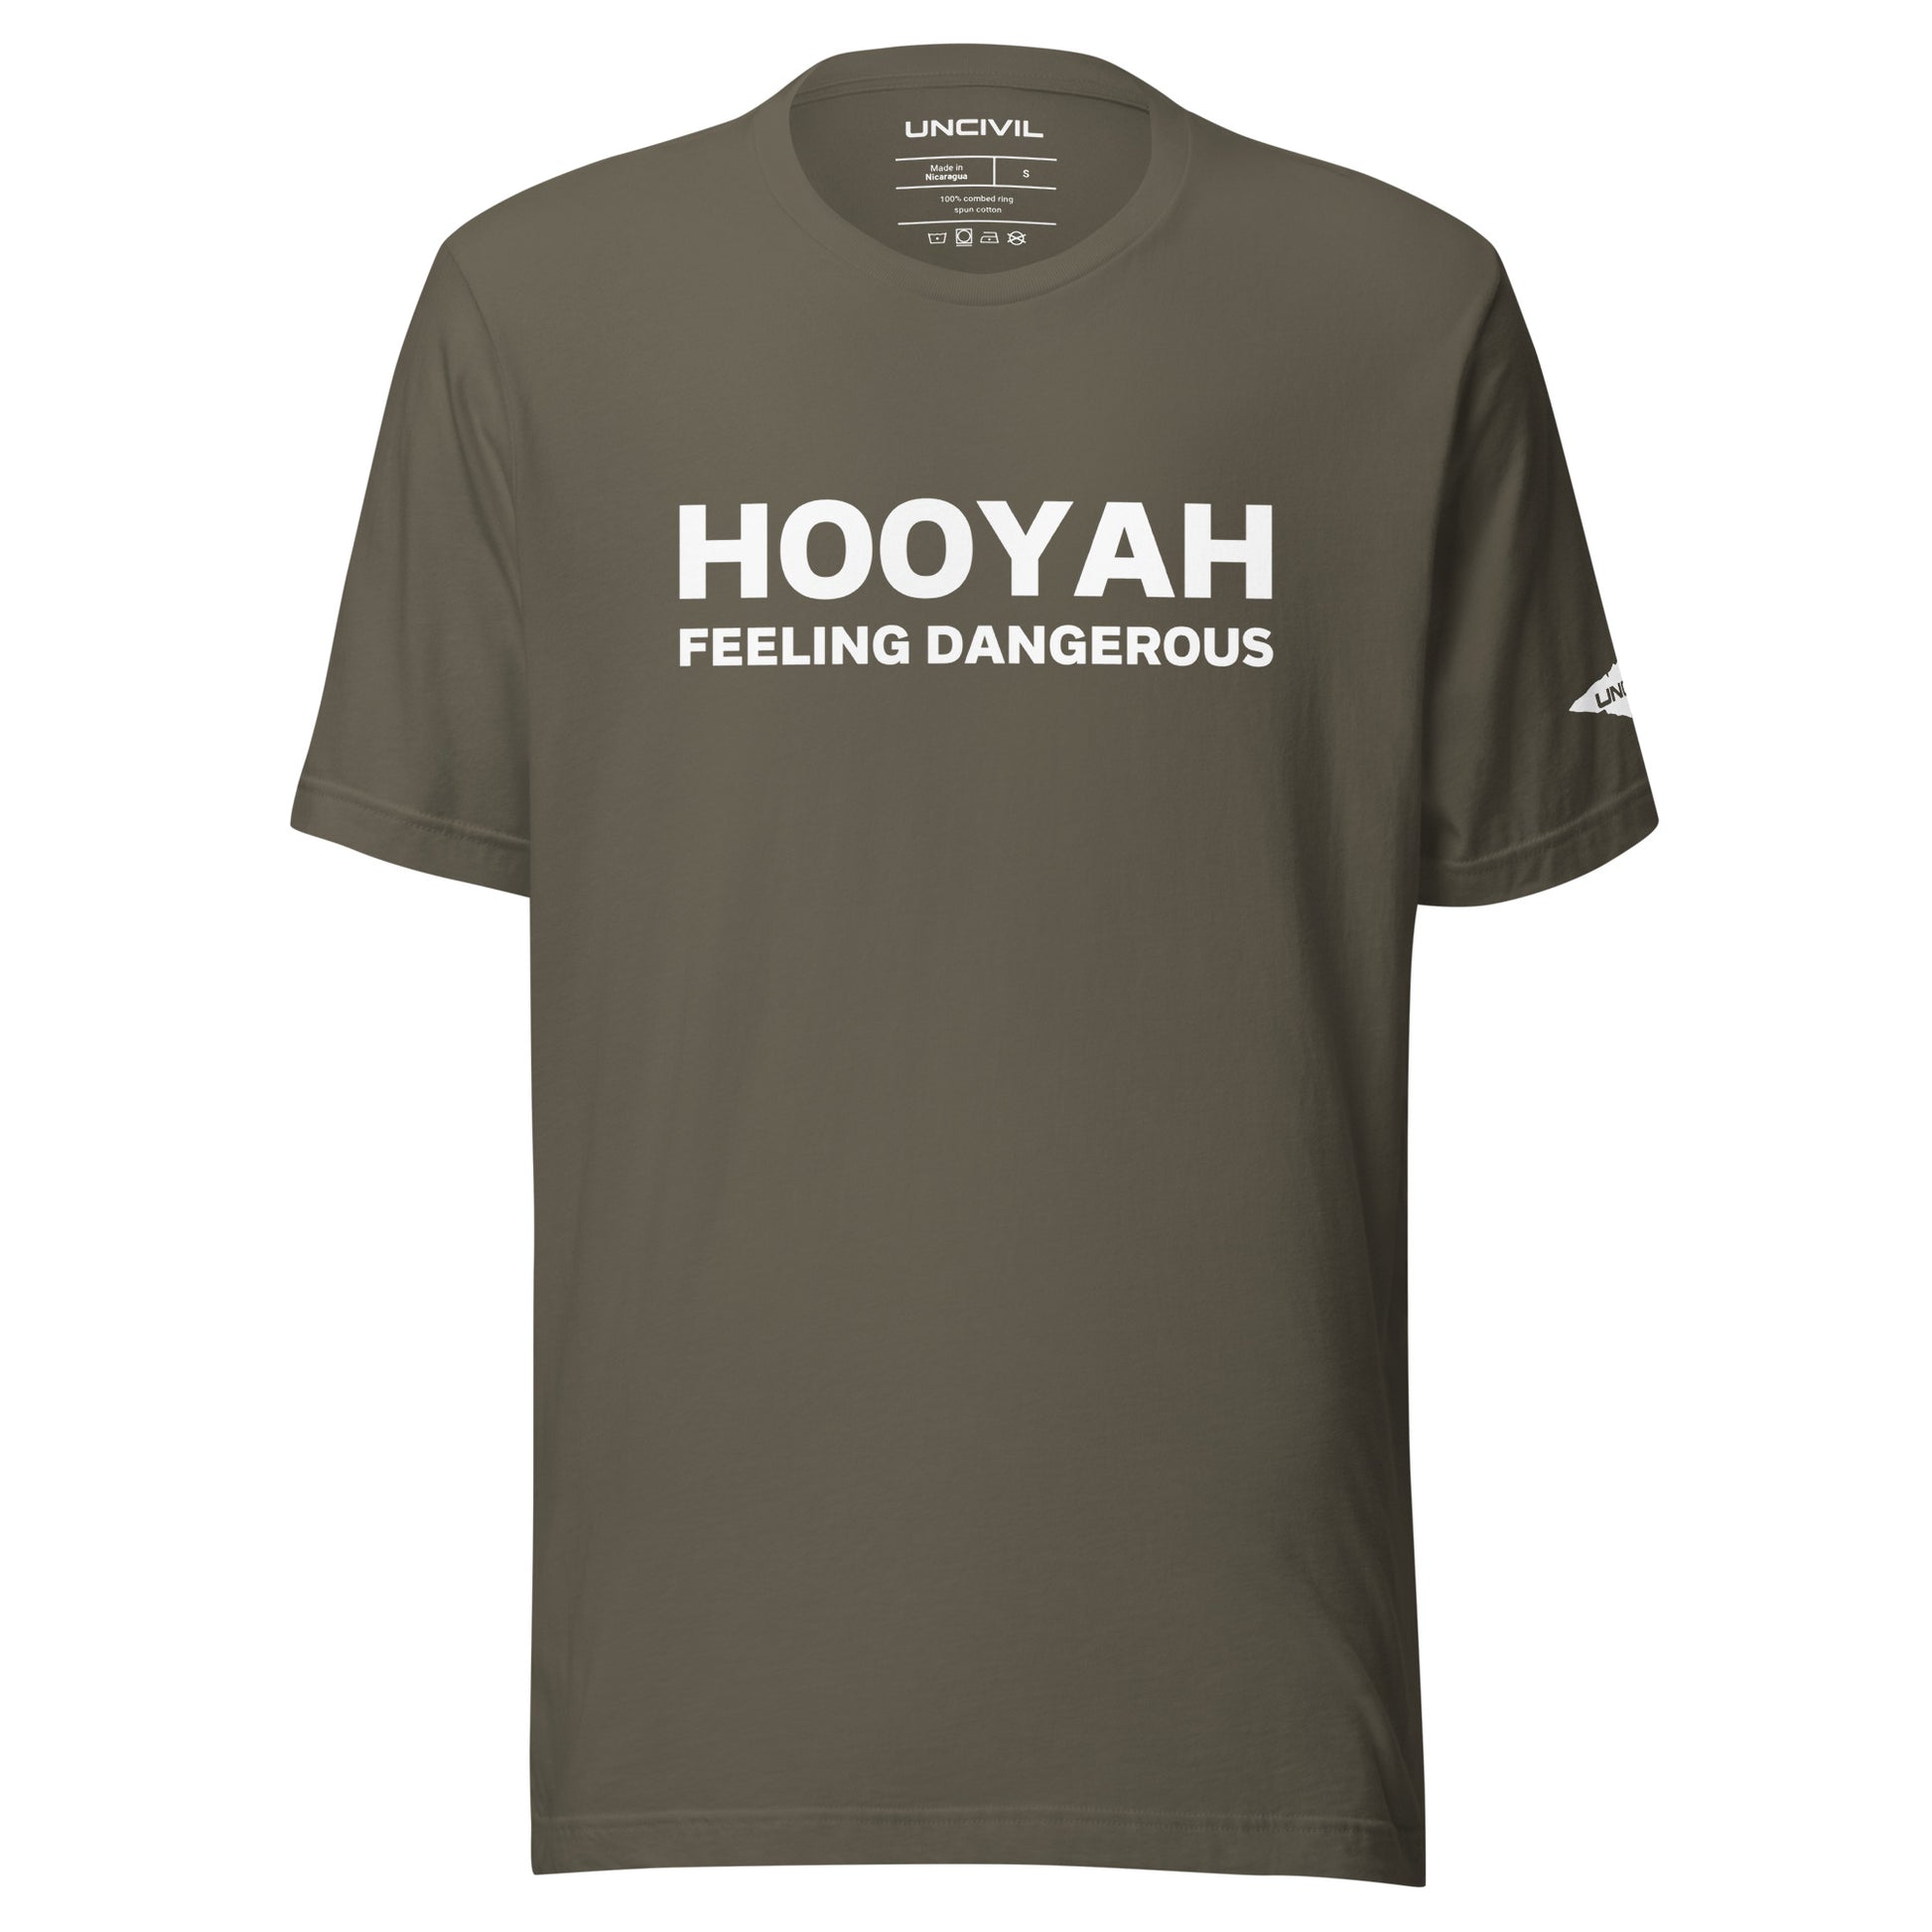 Hooyah, Feeling Dangerous shirt. The term "hooyah" is a U.S. Navy SEALs battle cry often used as motivation. Army green unisex t-shirt.